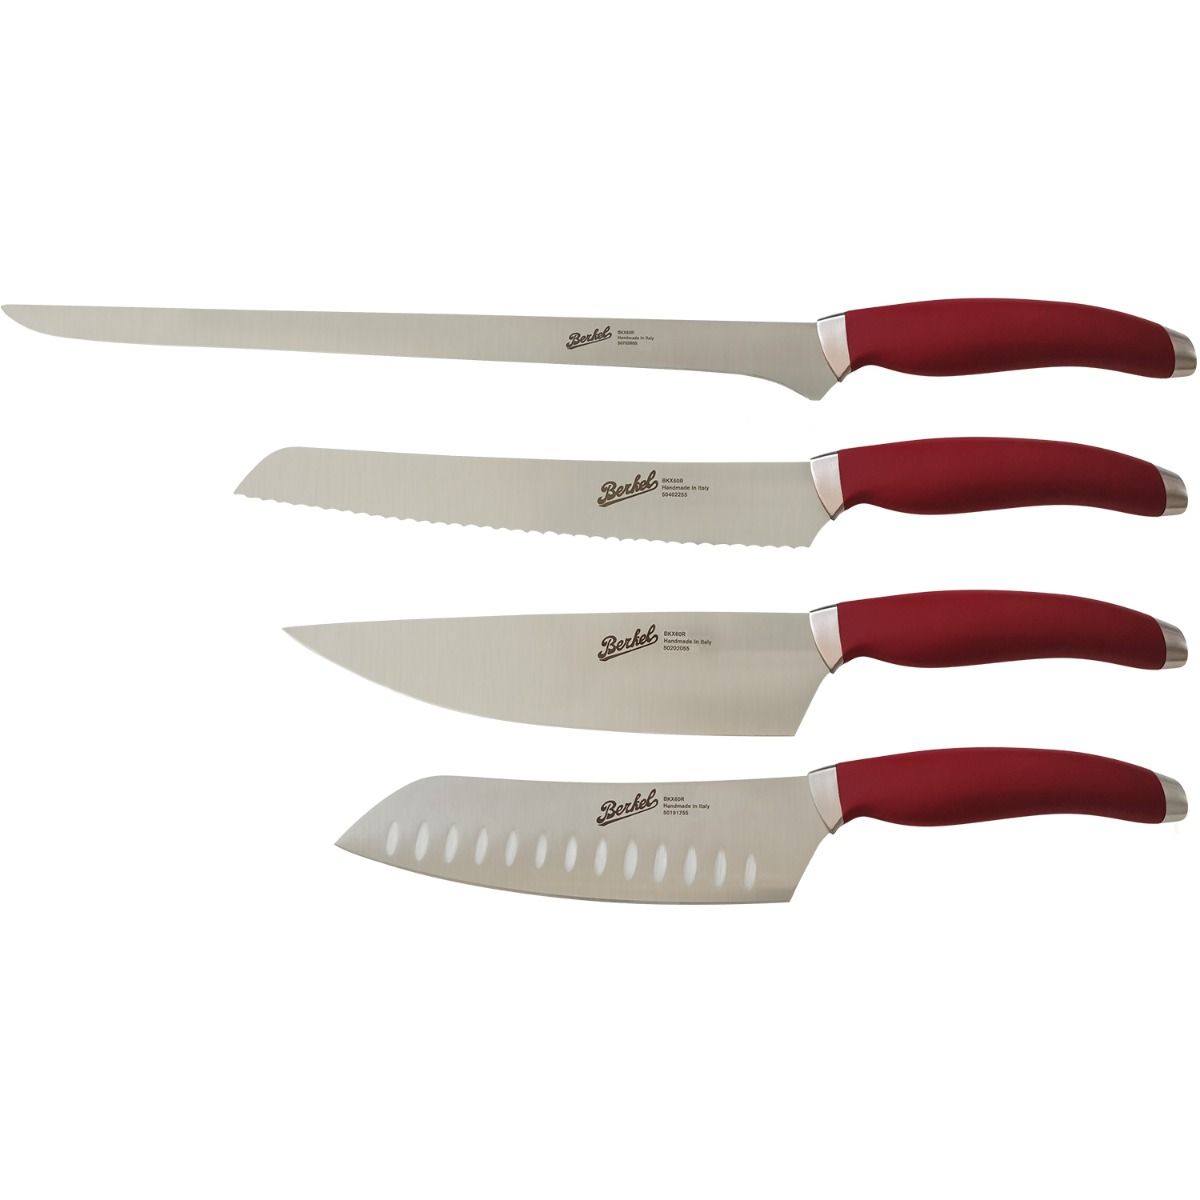 Berkel Teknica set of 4 Red Chef's knives